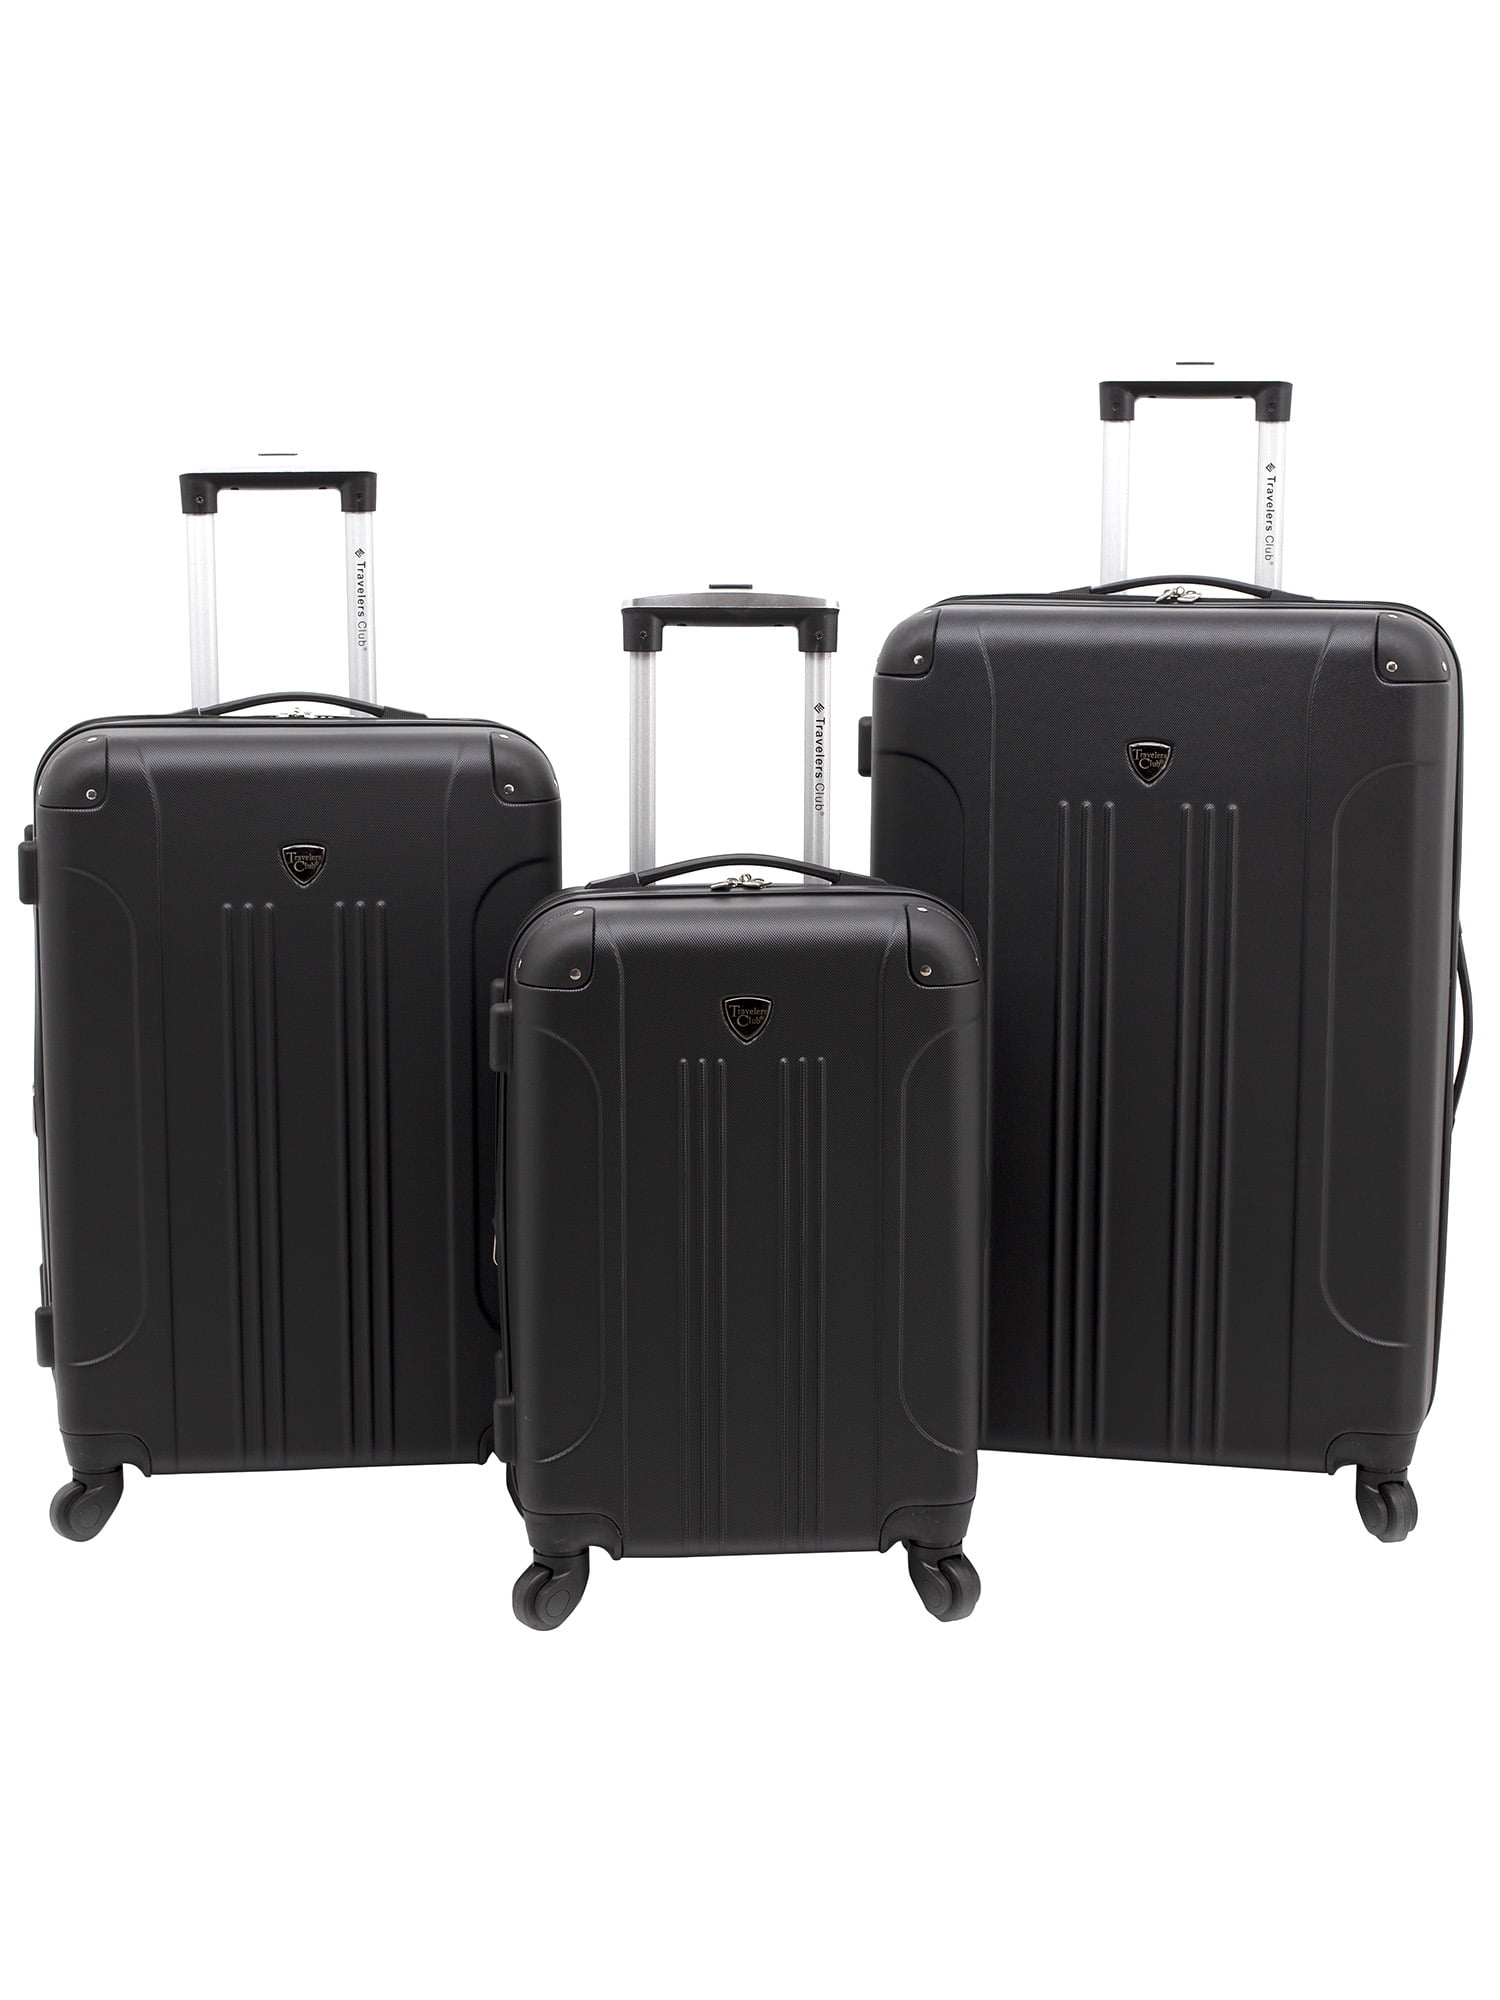 Travelers Club - 3 pc. Expandable hard-side luggage set - Walmart.com ...